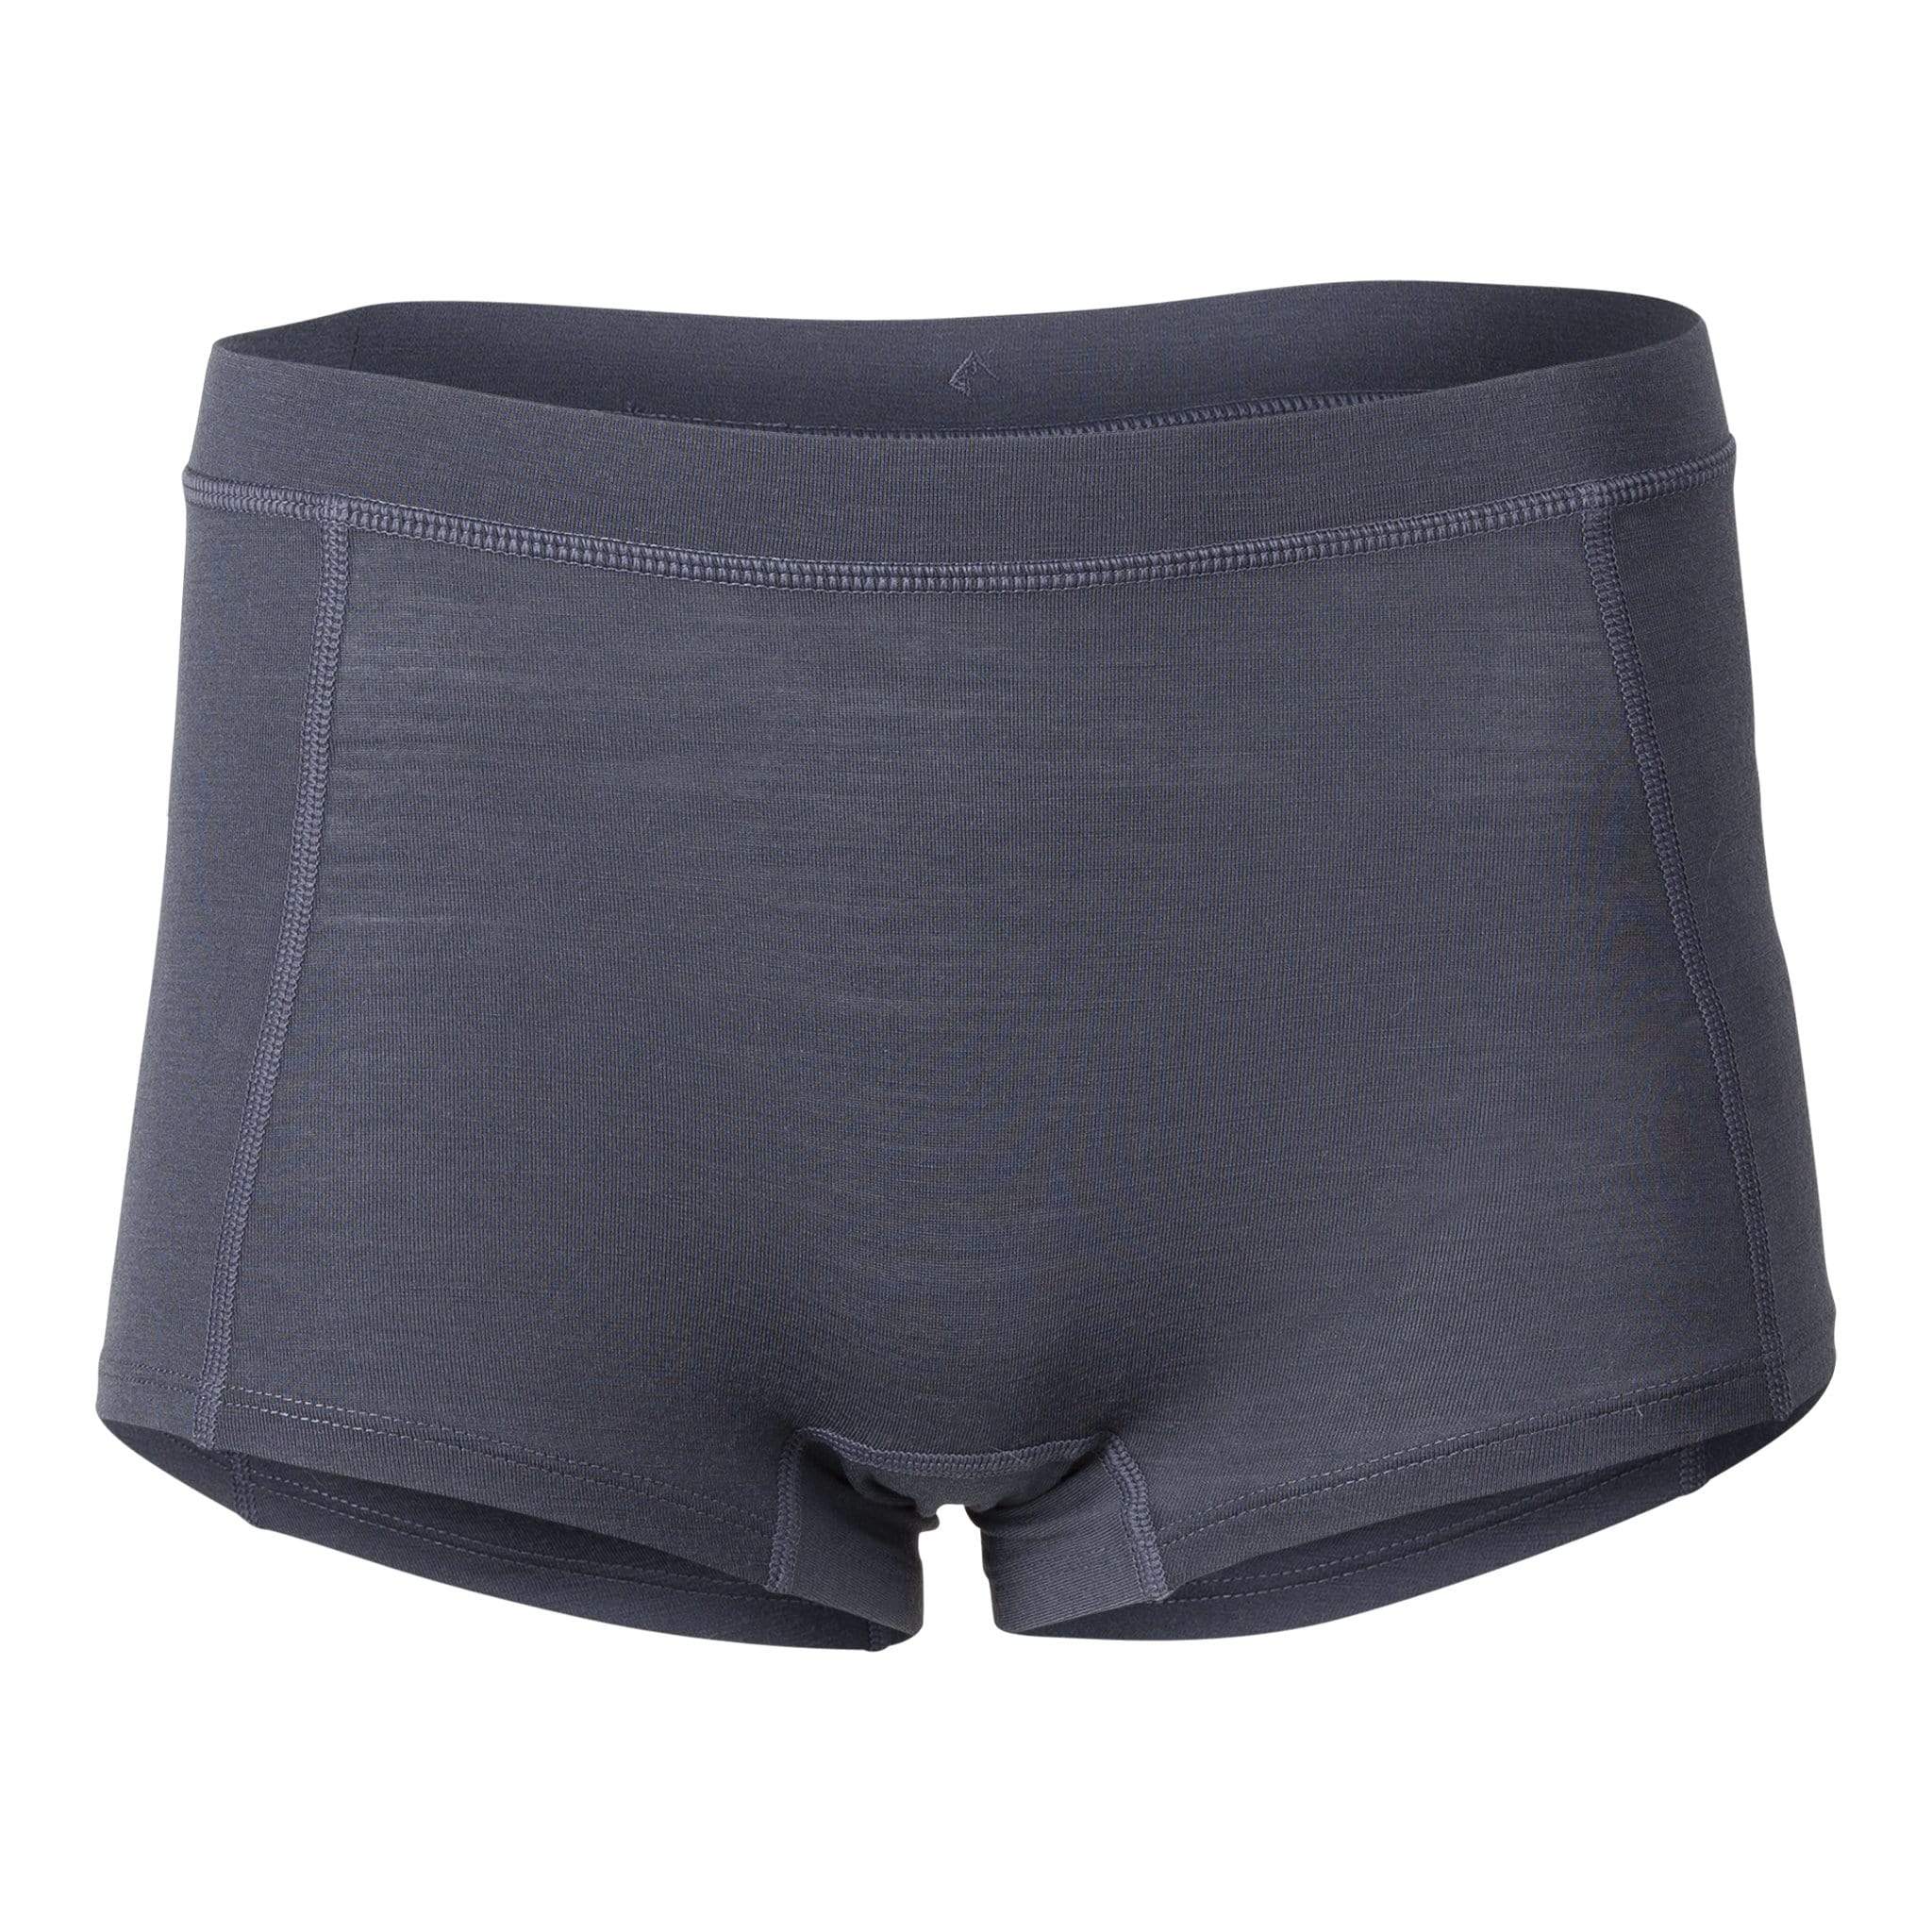 Buy online Women Black Cotton Blend Boy Shorts Panty from lingerie